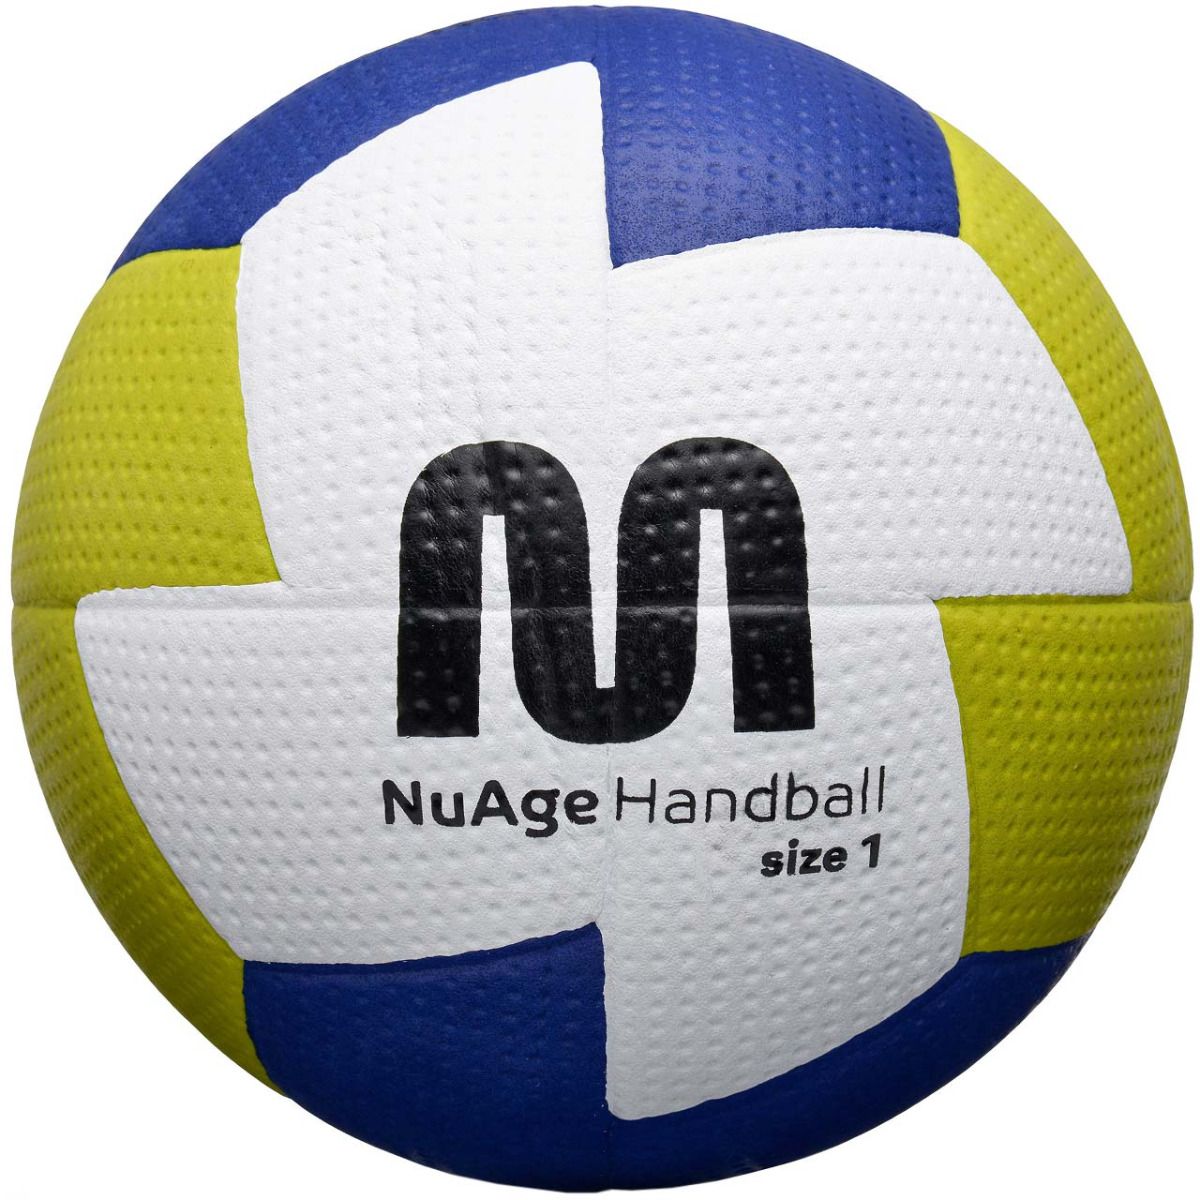 Meteor Handball Junior Nuage 1 16692